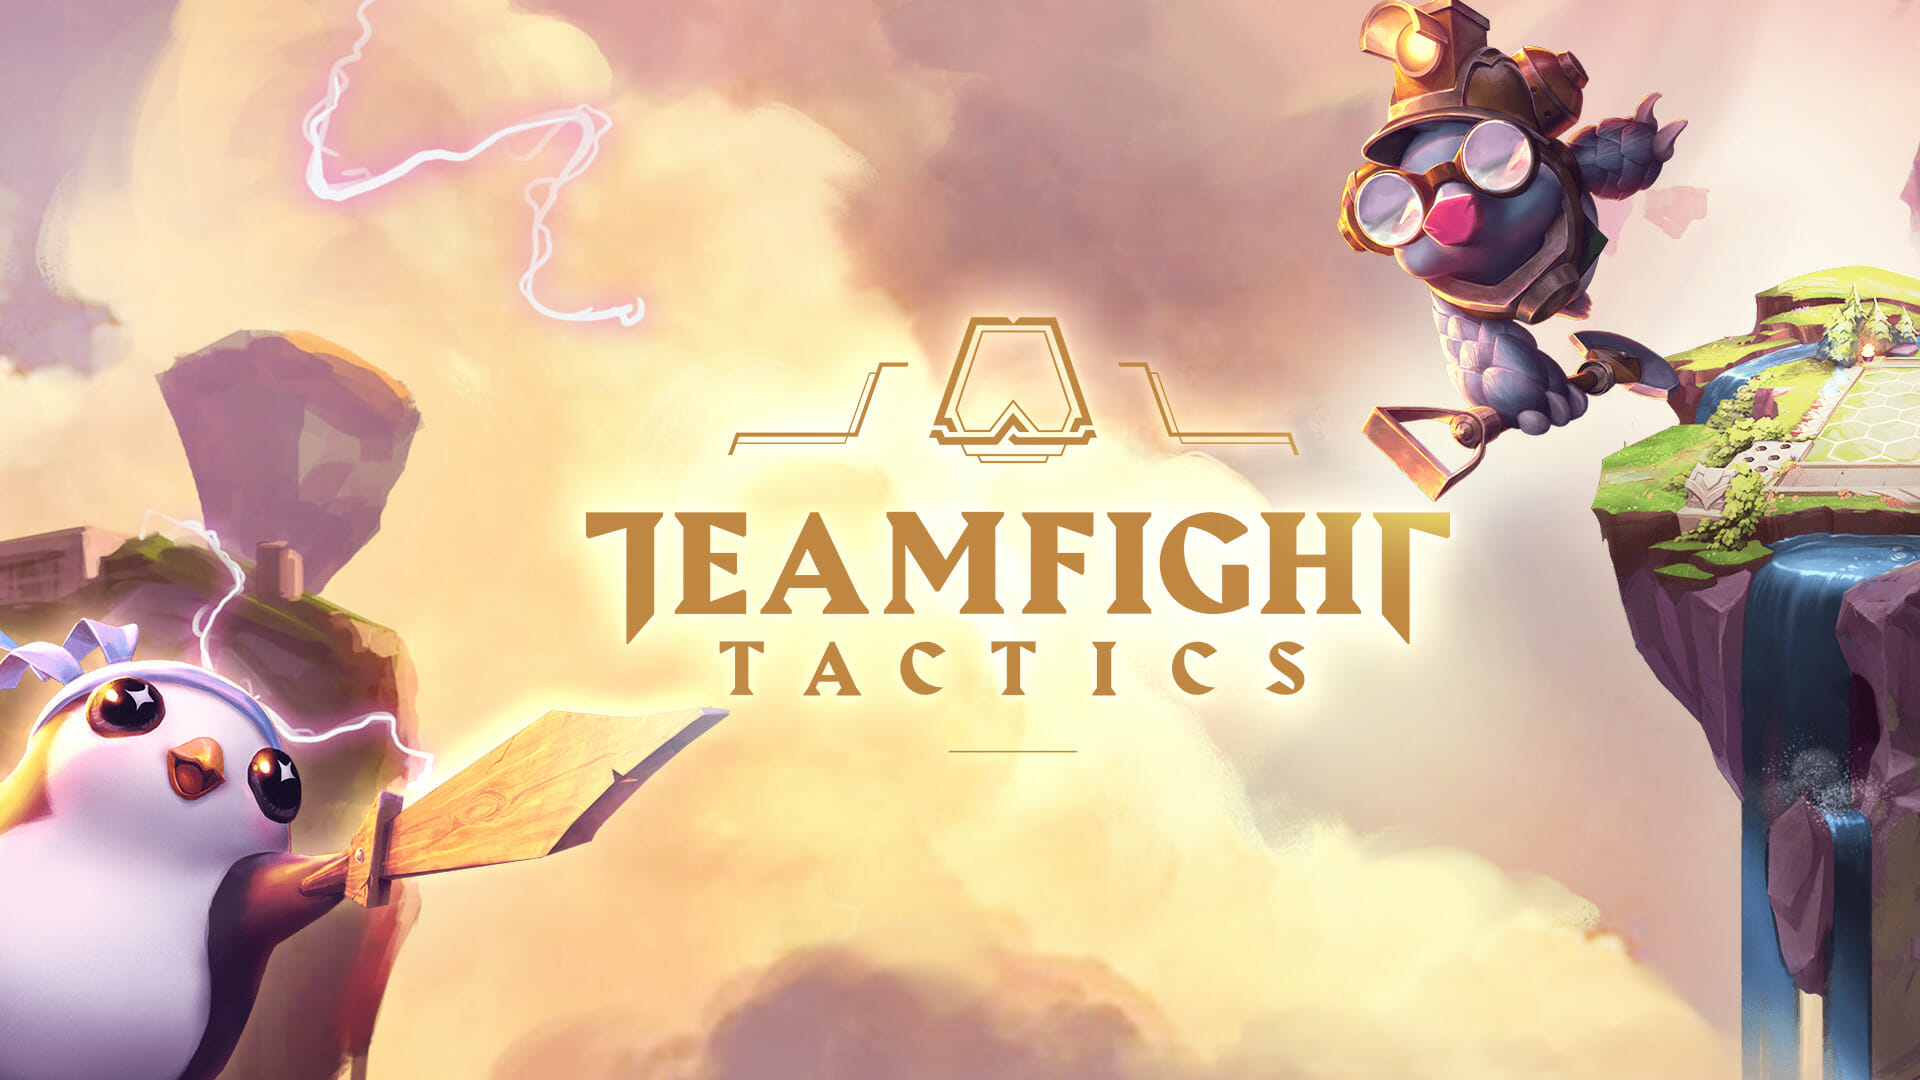 Teamfight Tactics League of Legends Wallpapers